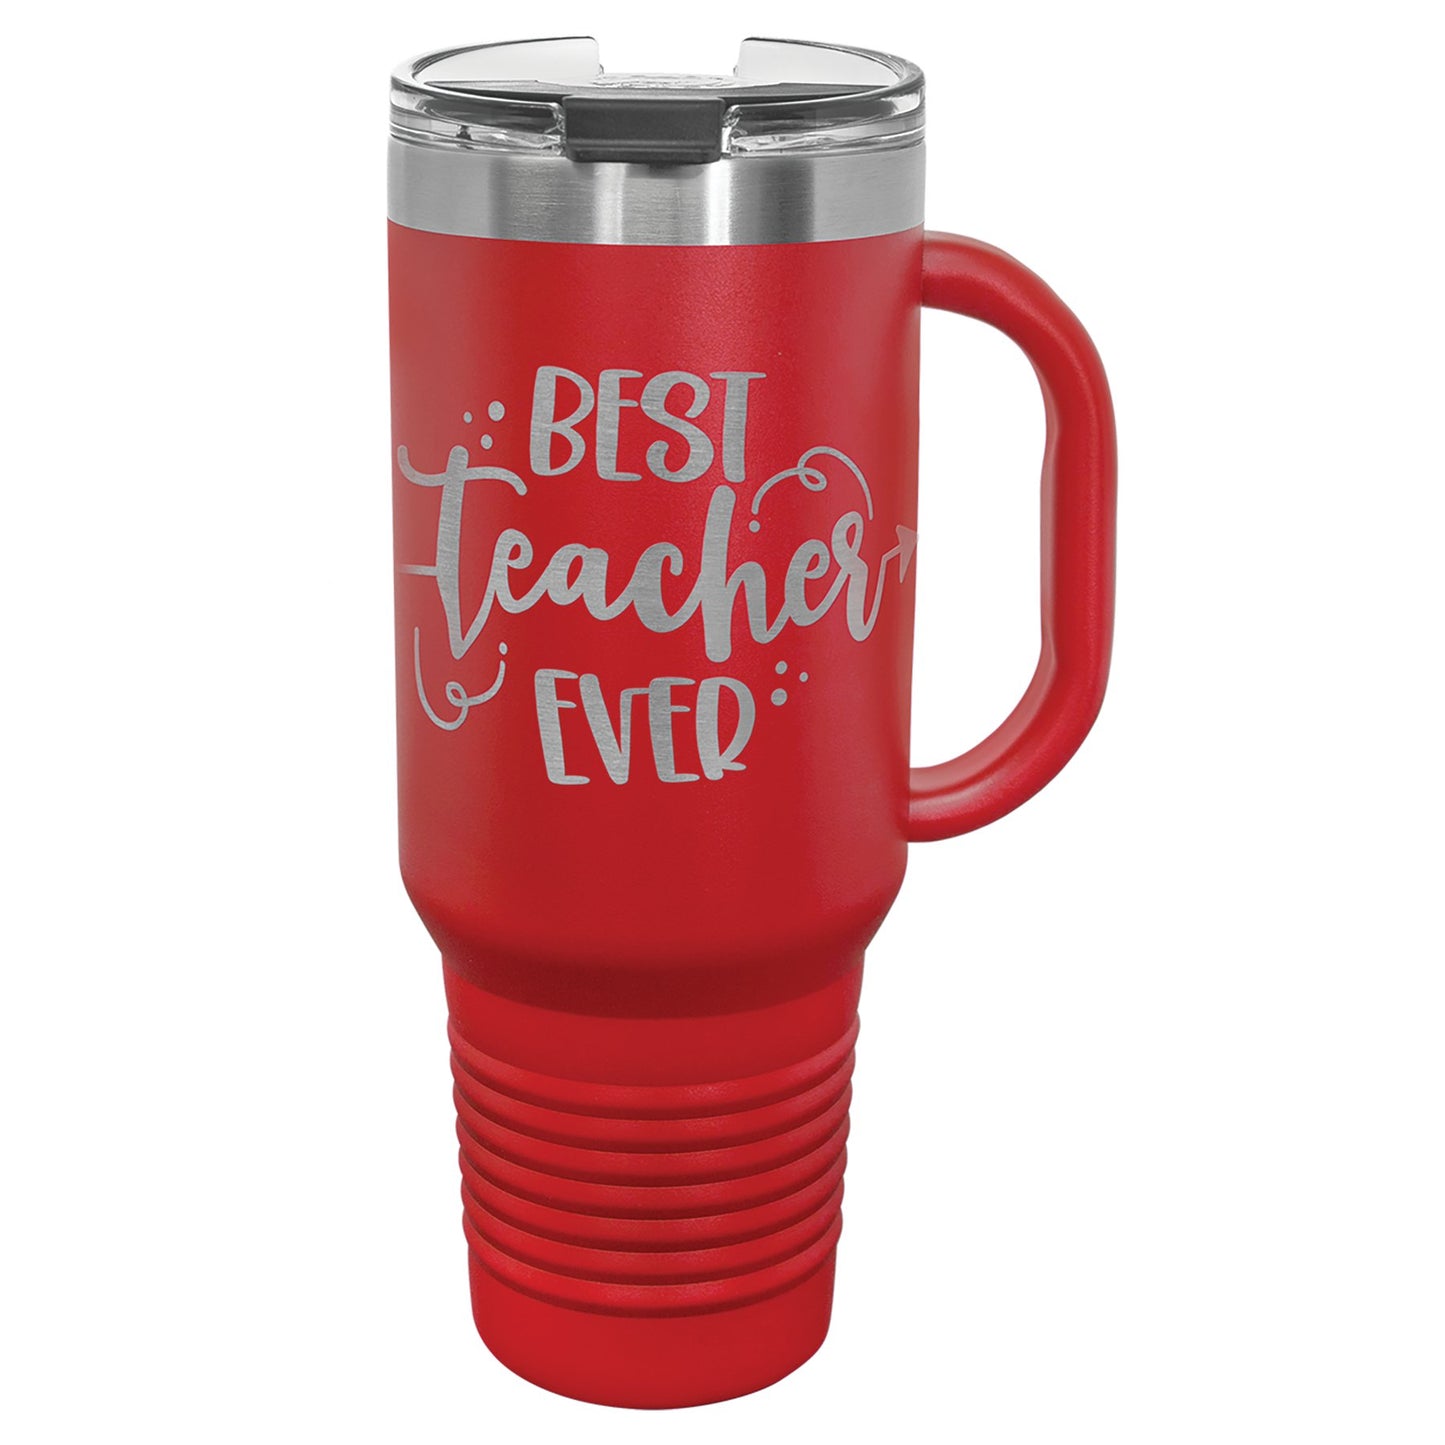 40 oz. Travel Tumbler Mug with Handle, Straw Included - Celebrate Prints